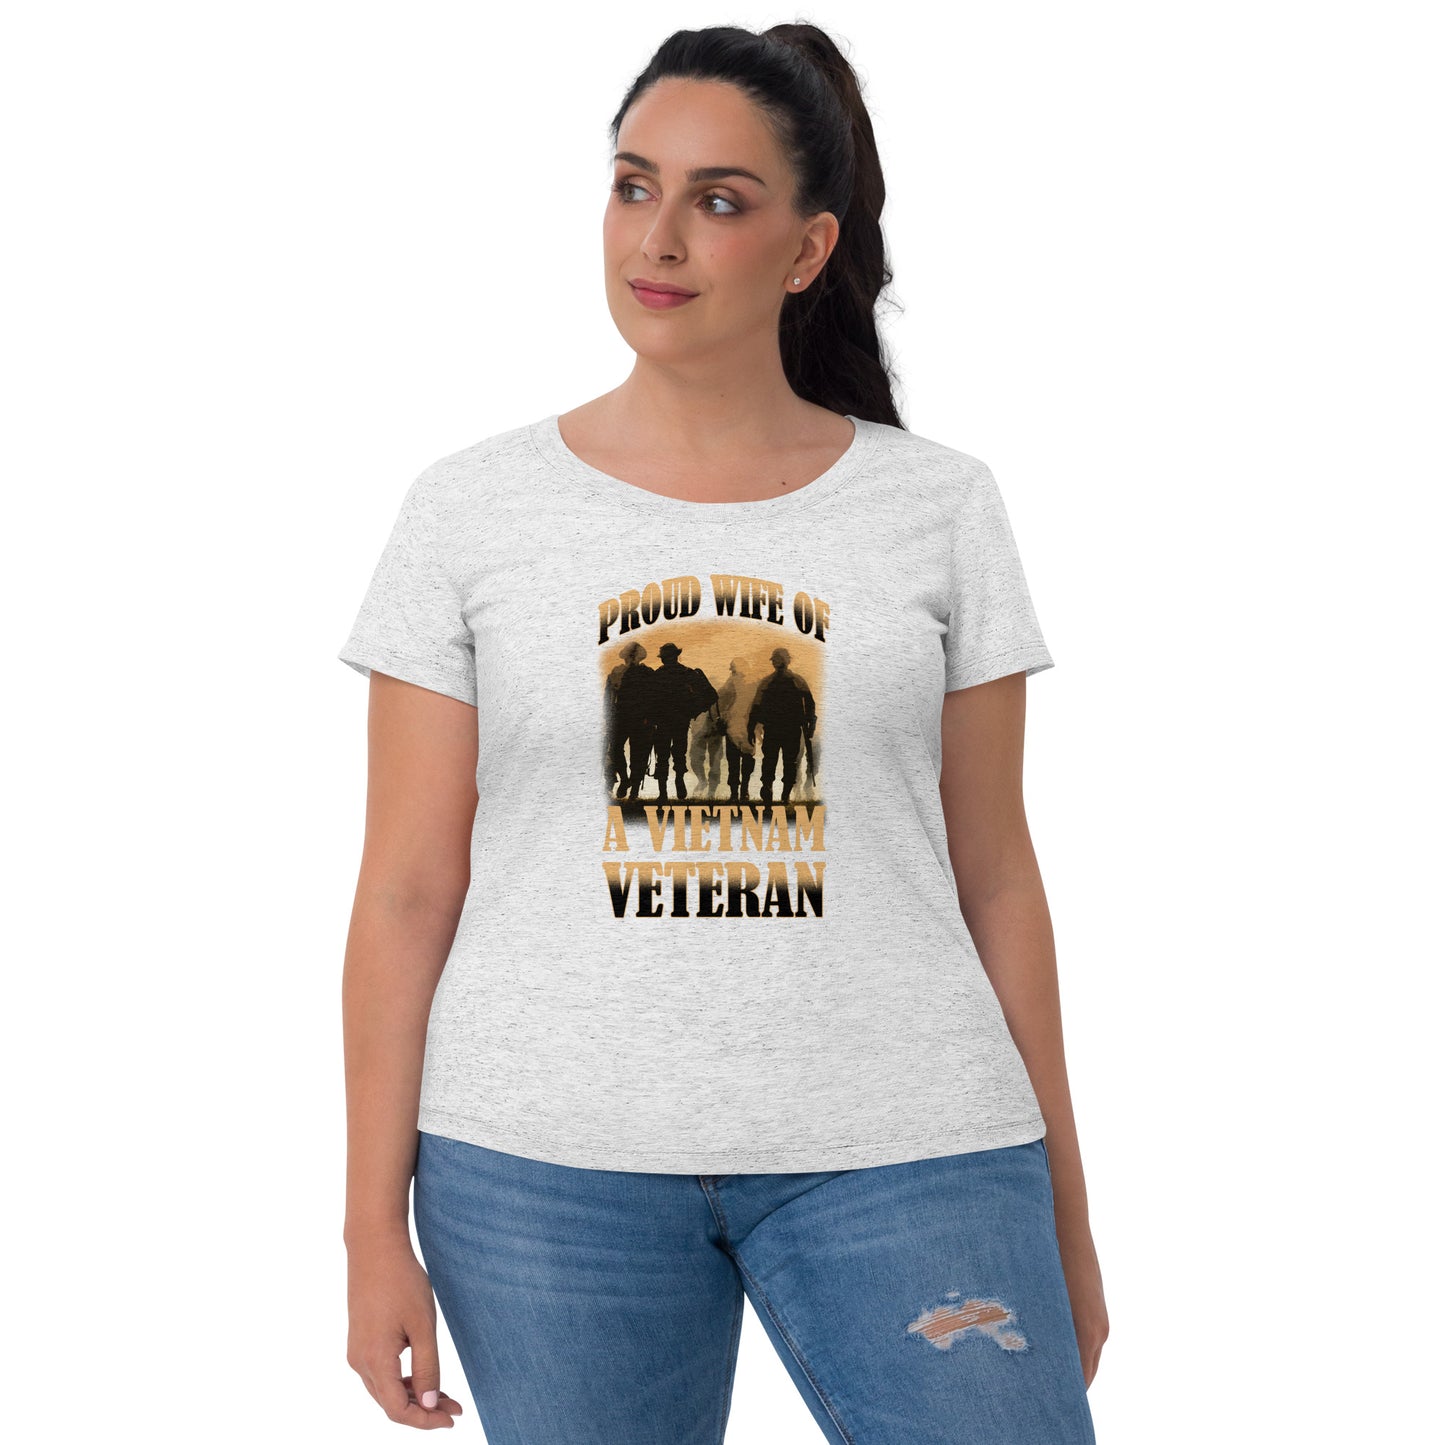 Proud Wife of a Vietnam Veteran - Ladies' short sleeve t-shirt